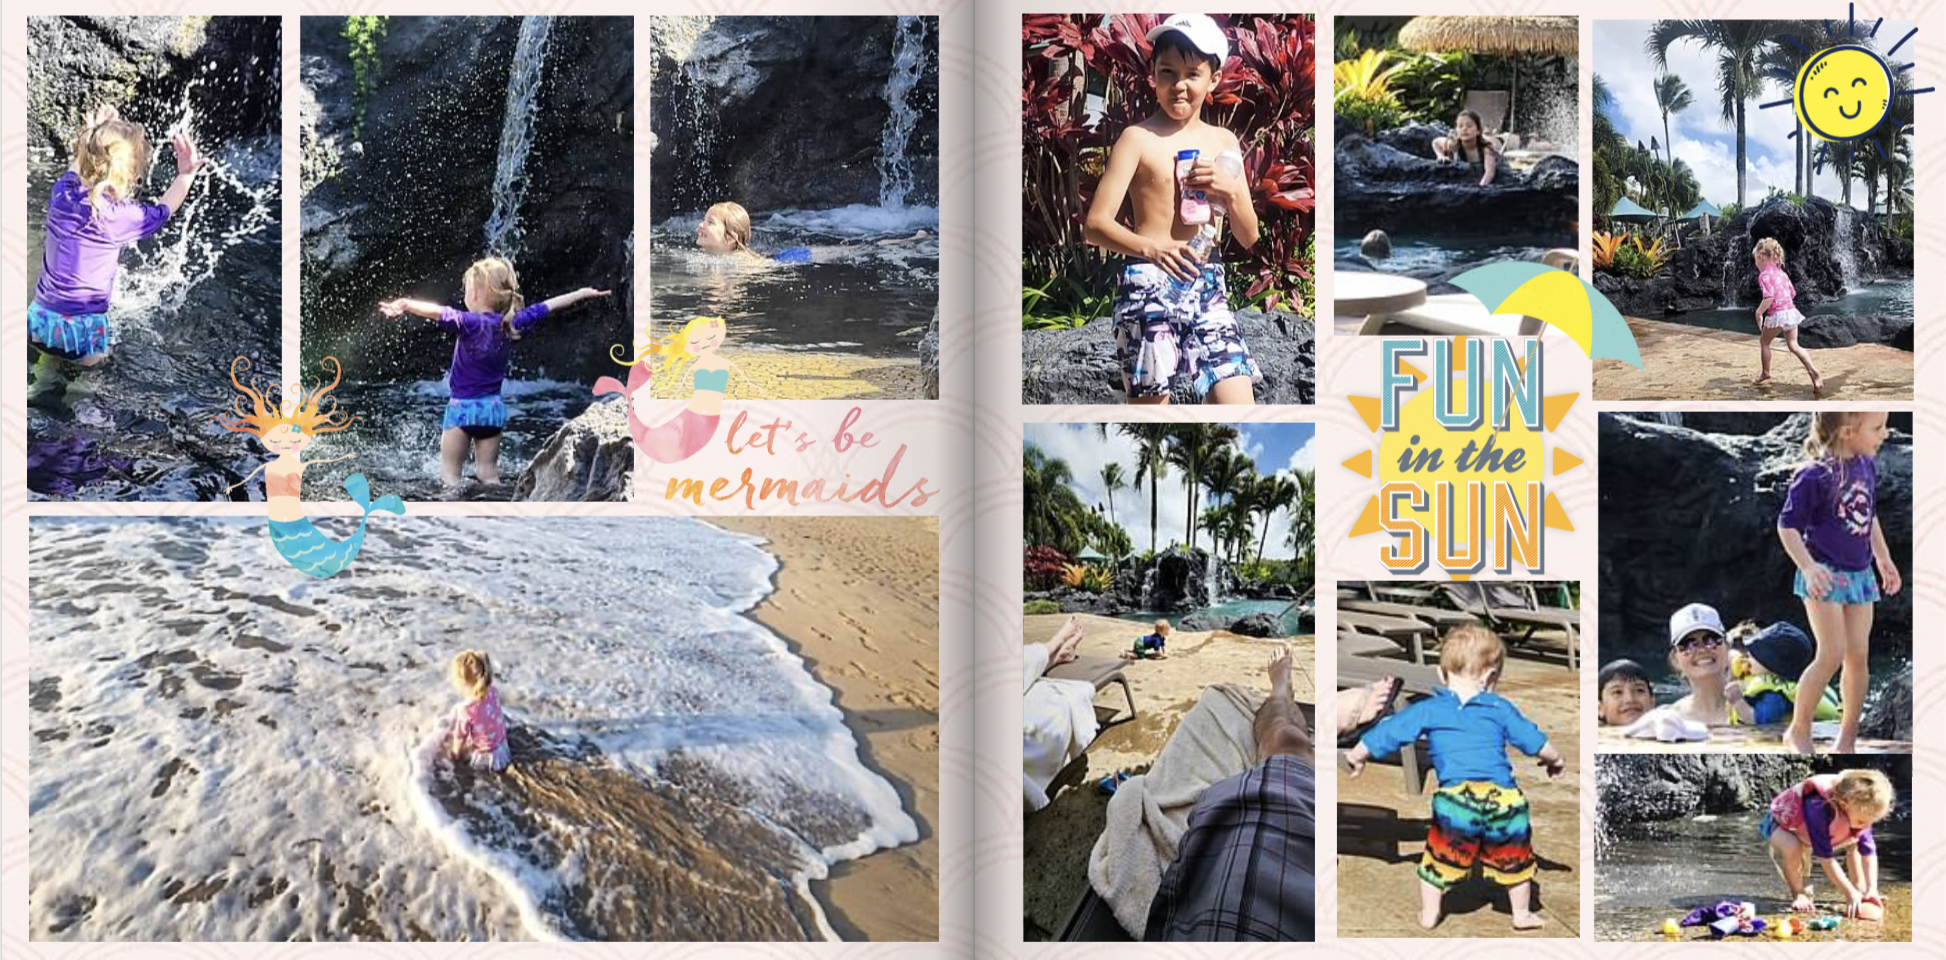 Kauai family vacation tips - fun in the sun